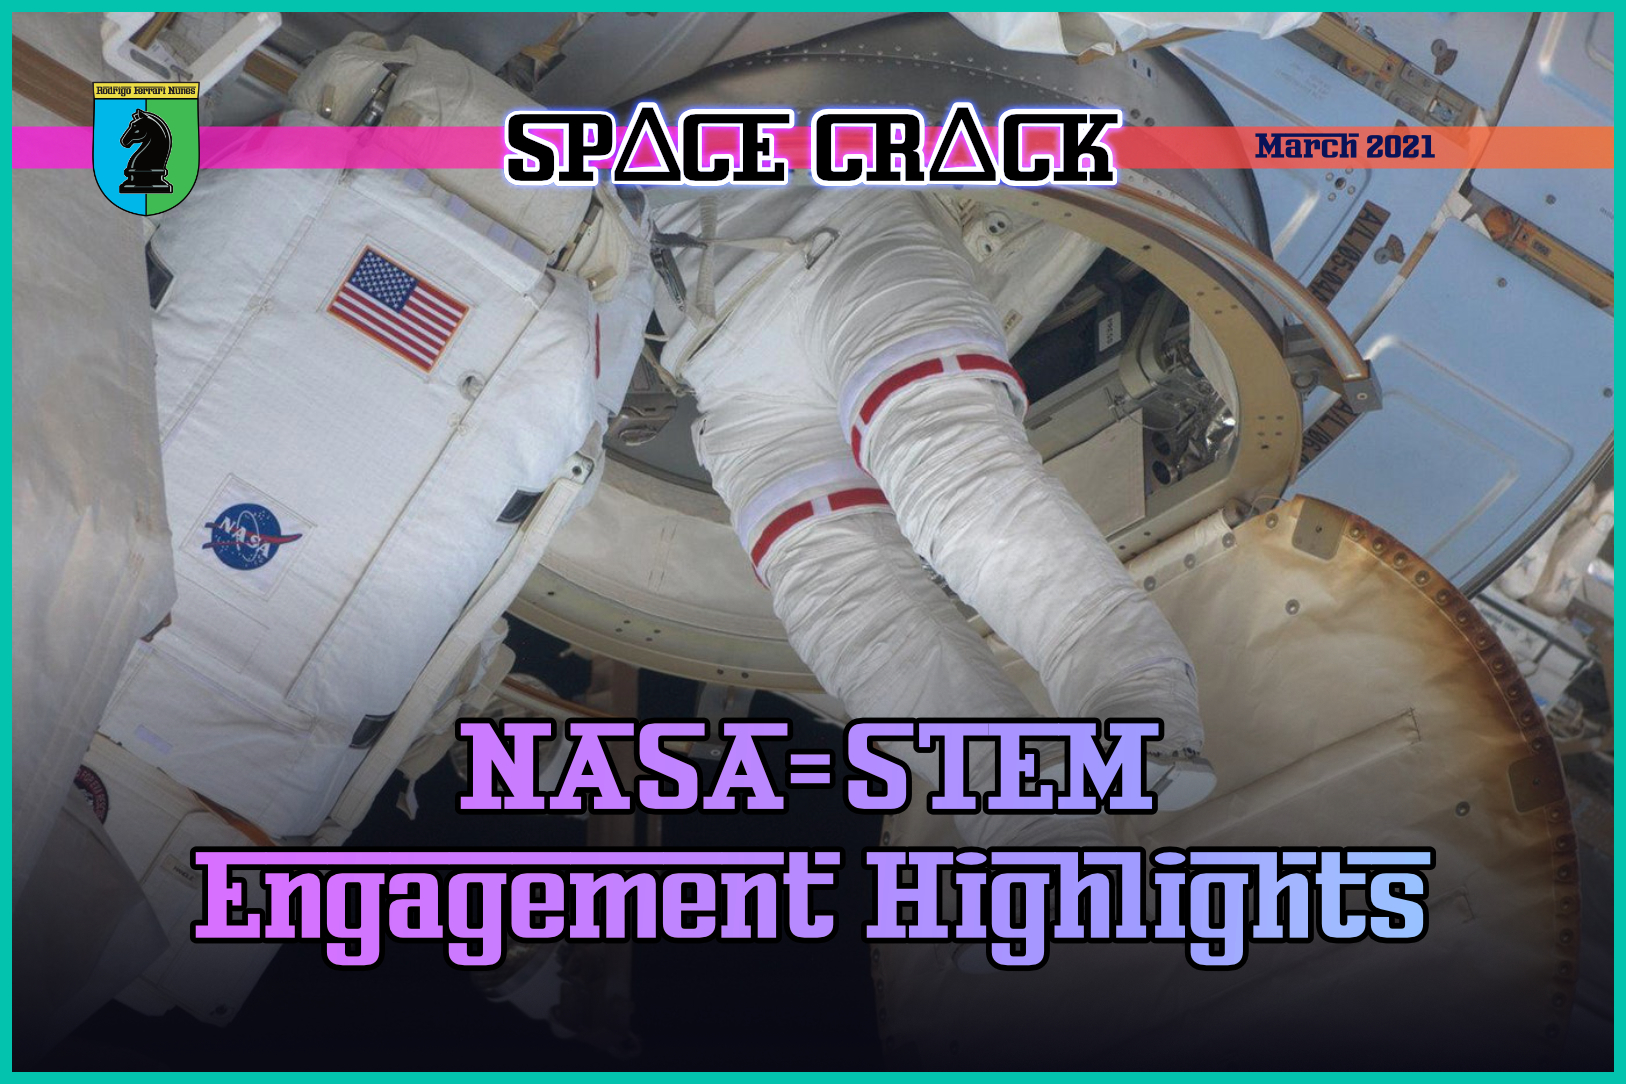 NASA STEM ENGAGEMENT HIGHLIGHTS 2020